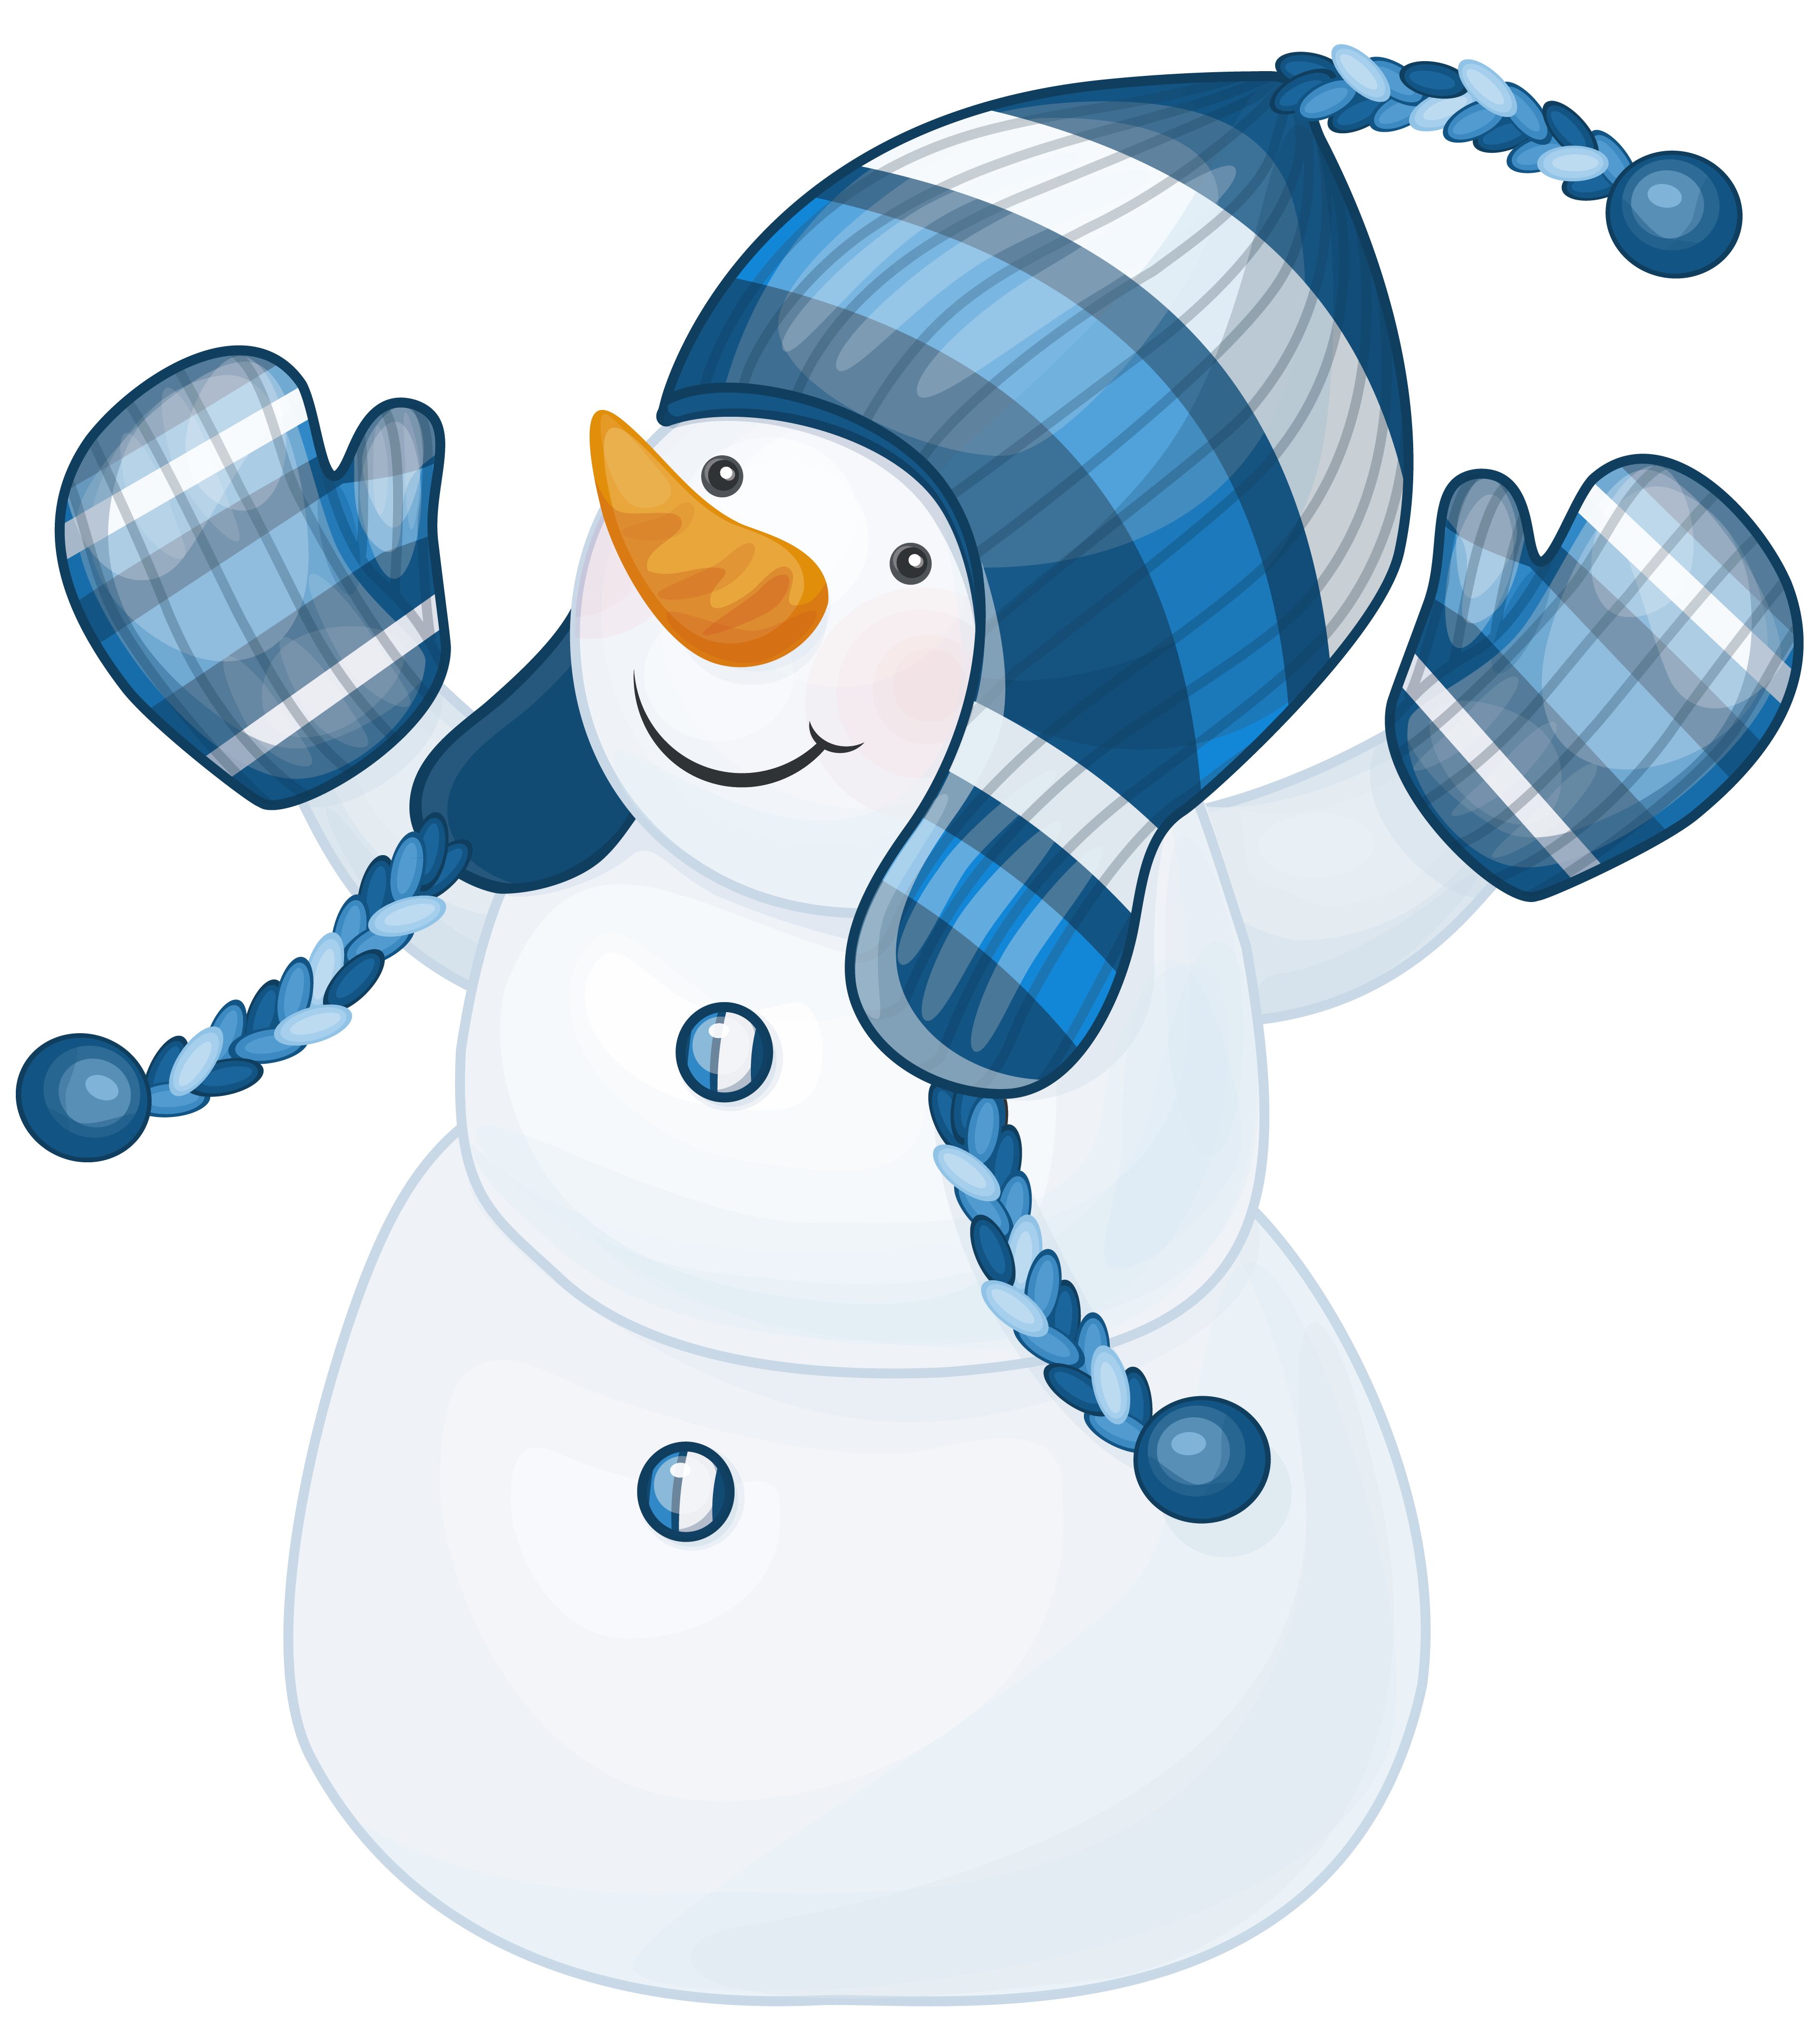 Cute Snowman Clip Art | Funny